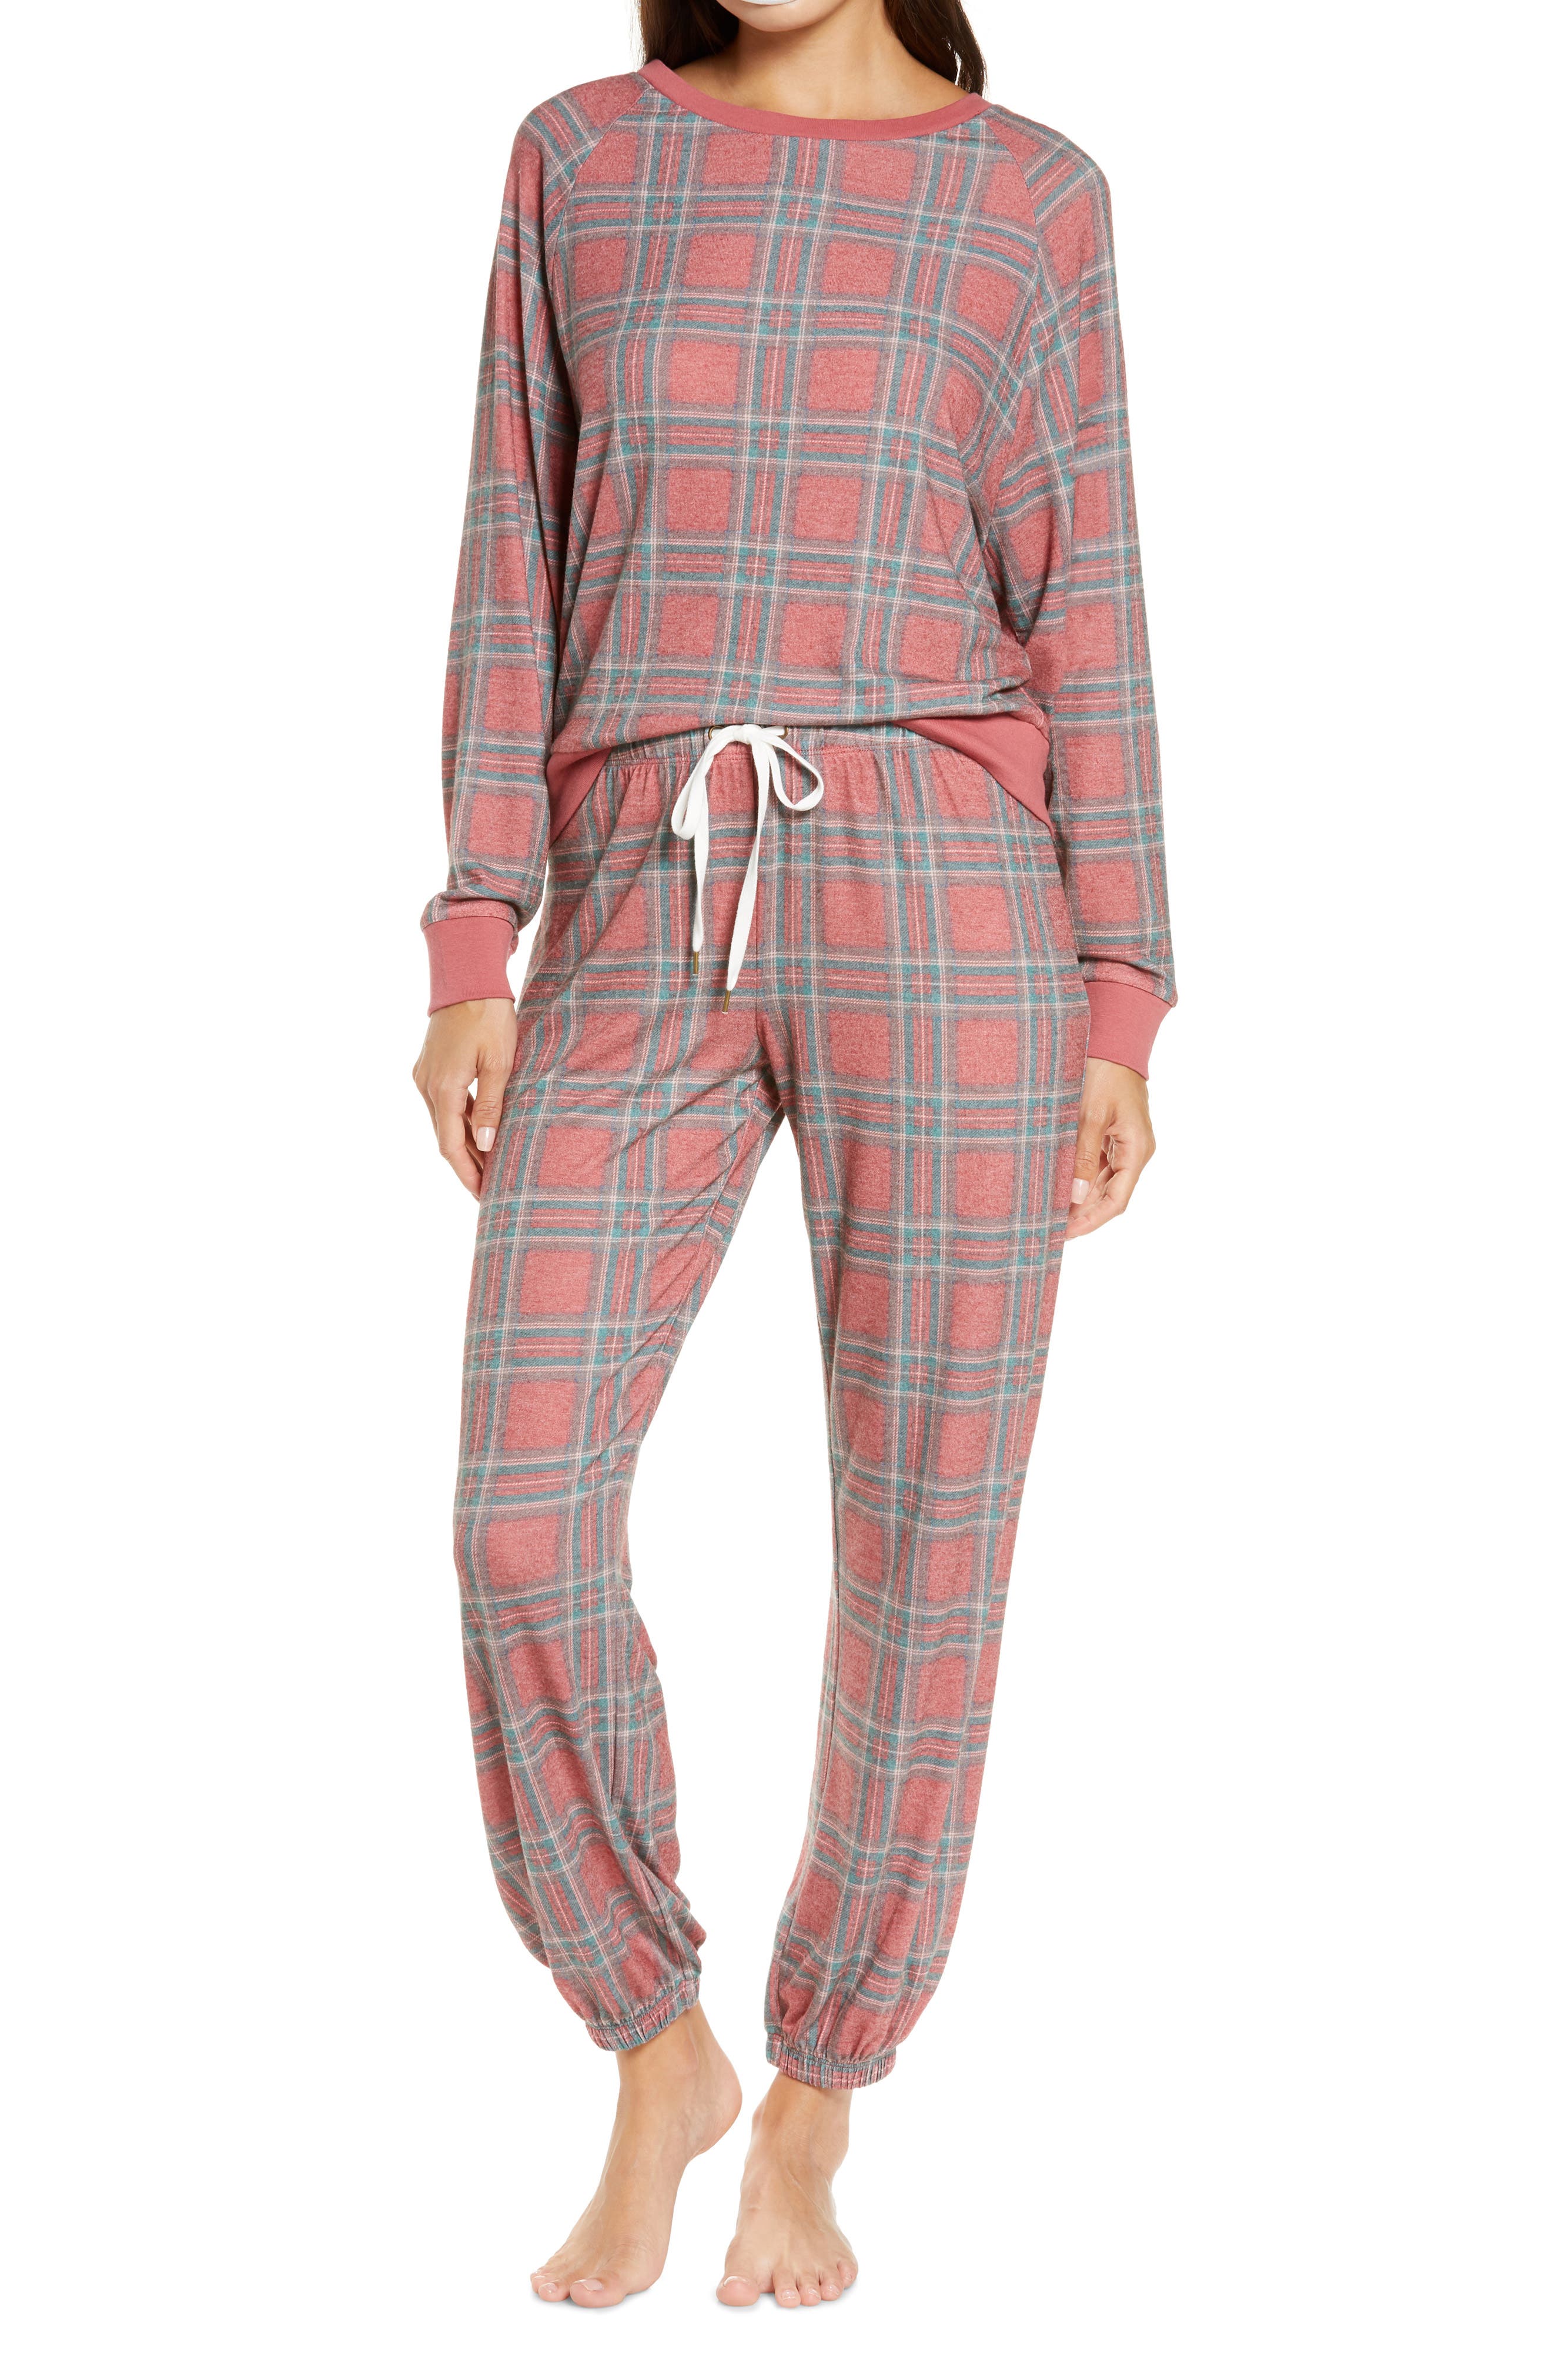 Honeydew Intimates Star Seeker Long Sleeve Top & Joggers 2-piece Pajama Set In Dashing Plaid